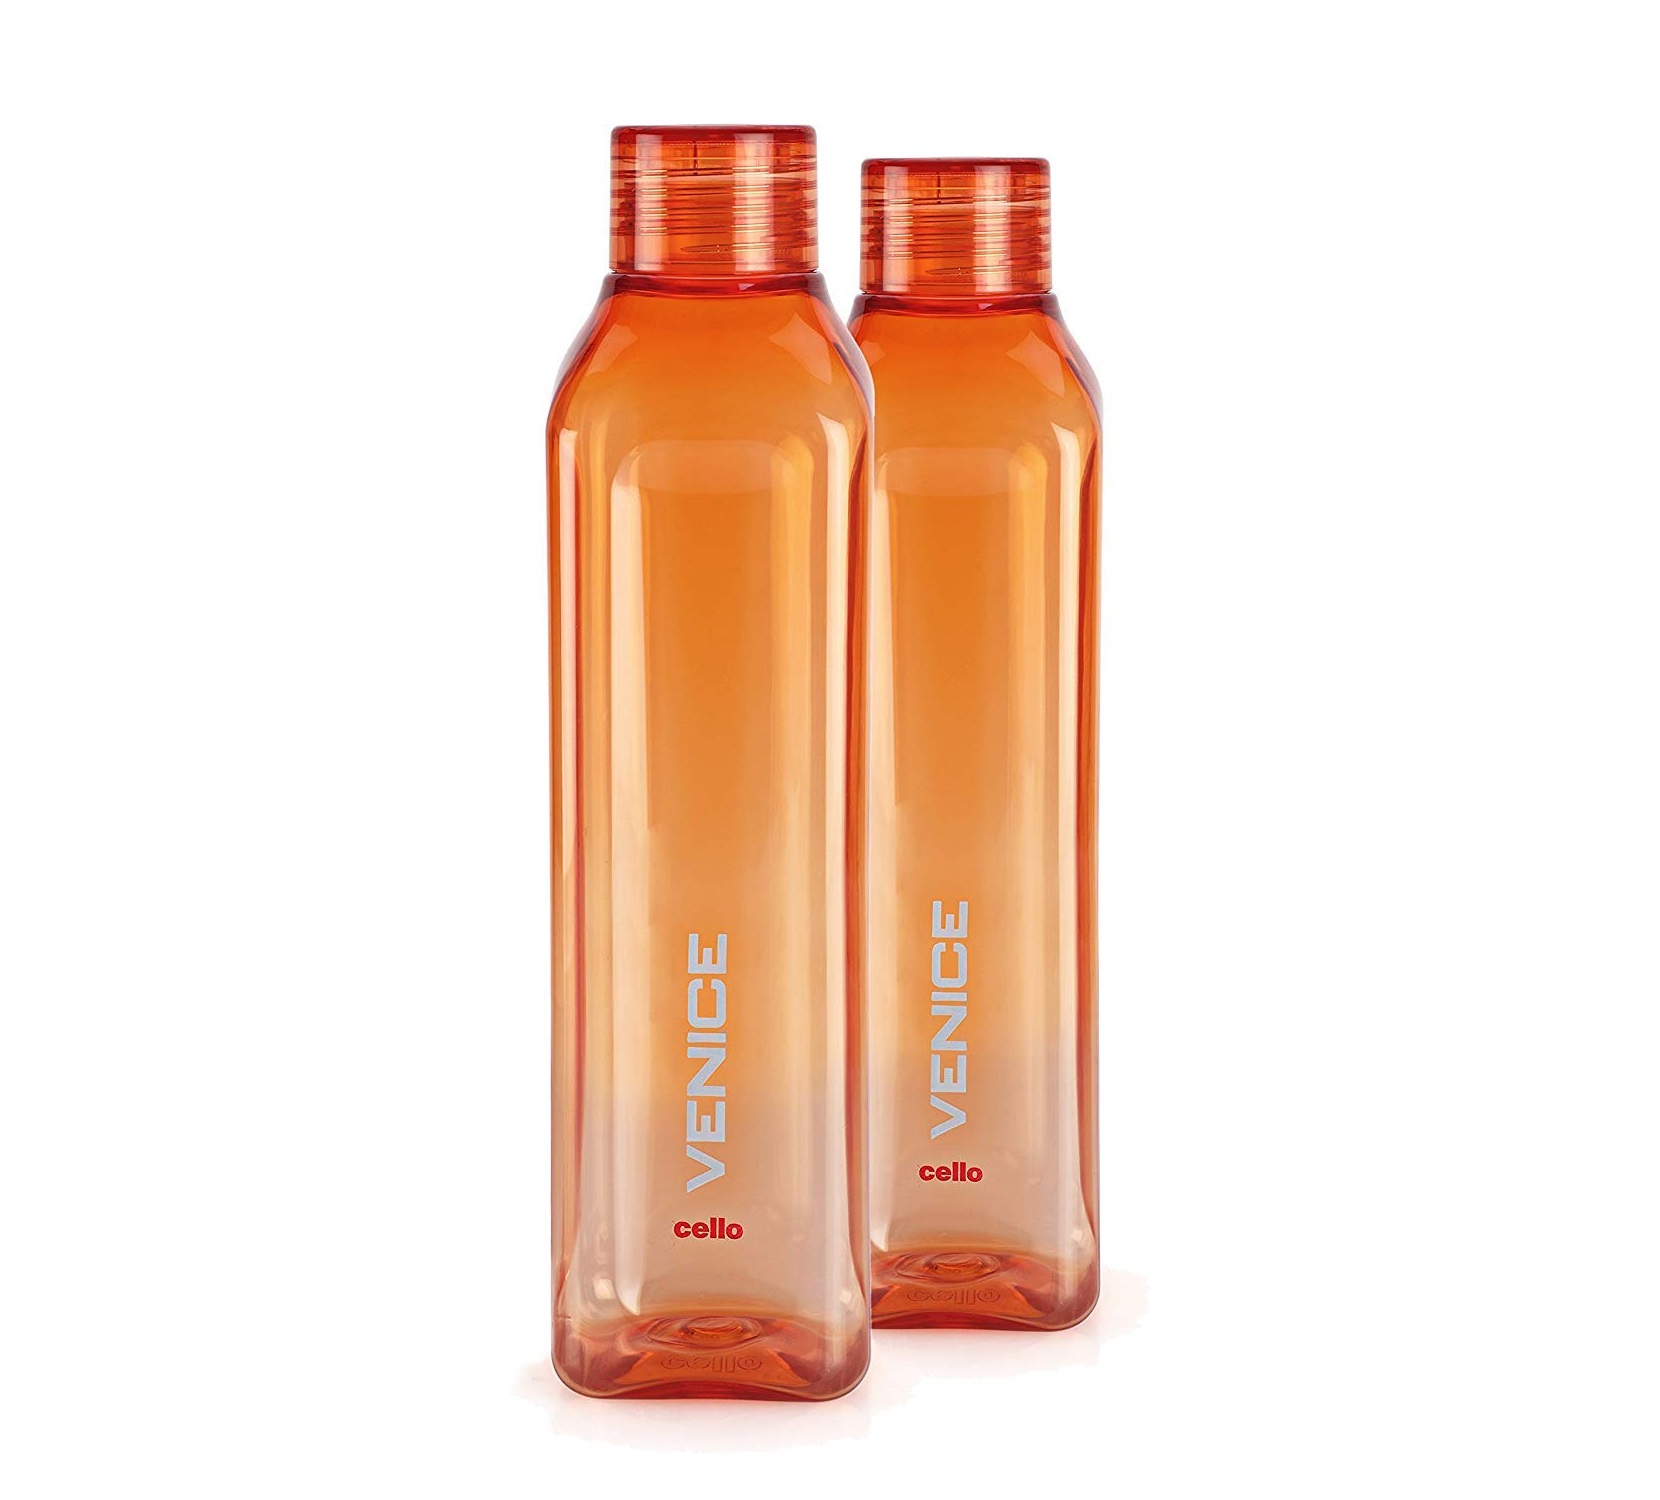 Cello Venice Plastic Water Bottle, (1L, Set of 2, Orange)